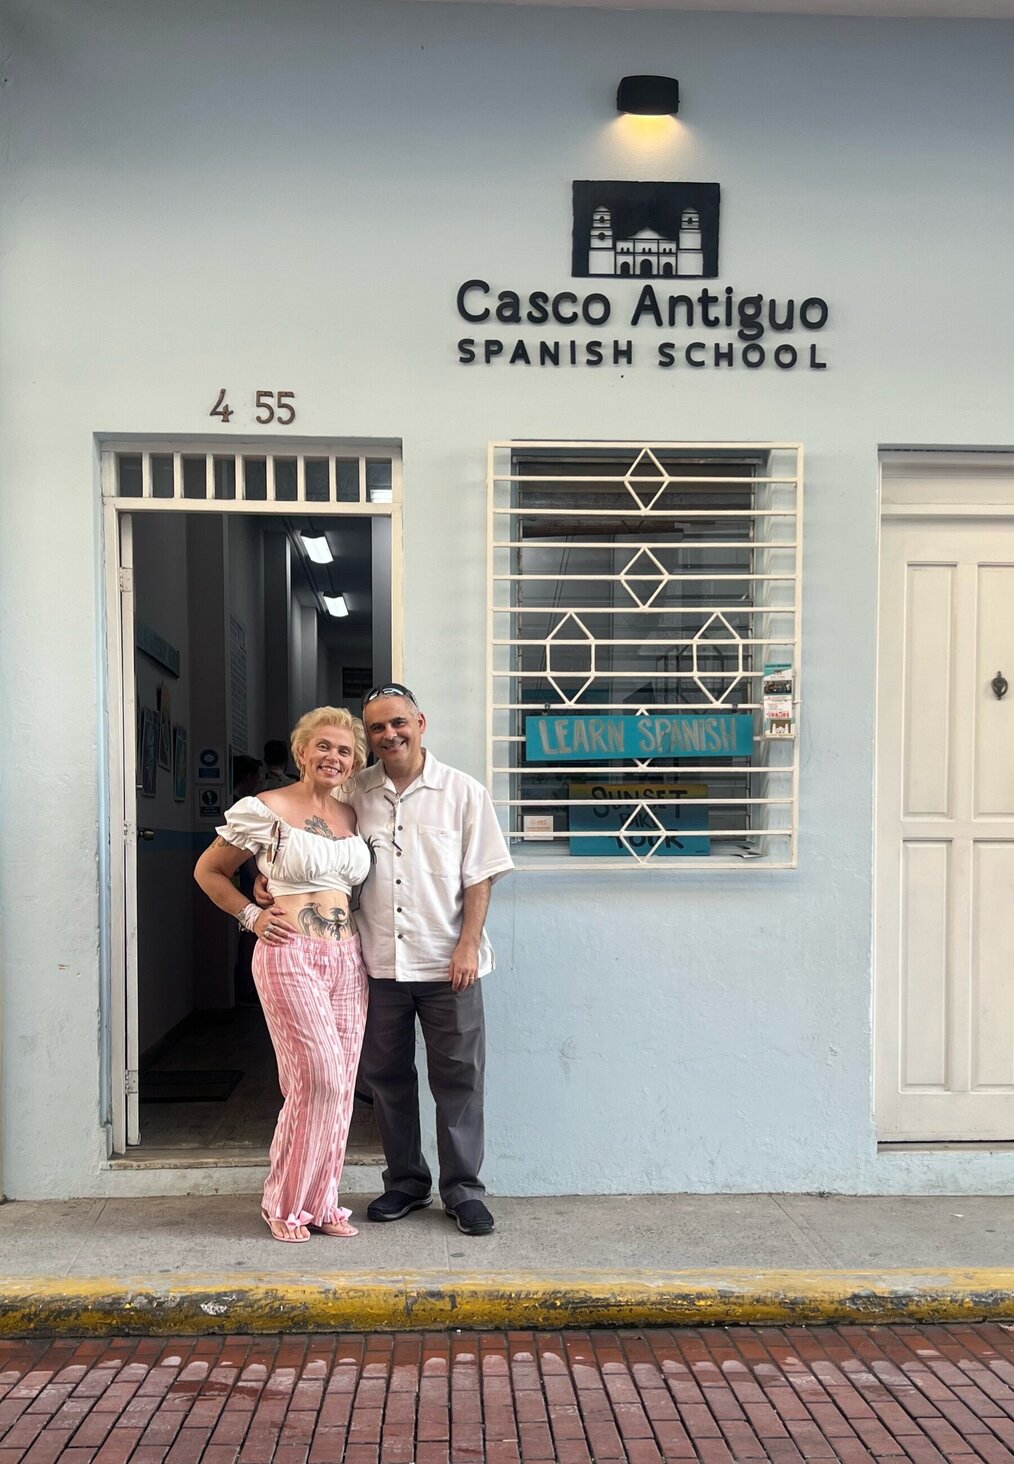 Casco Antiguo Spanish School | Reviews and Programs | Go Overseas